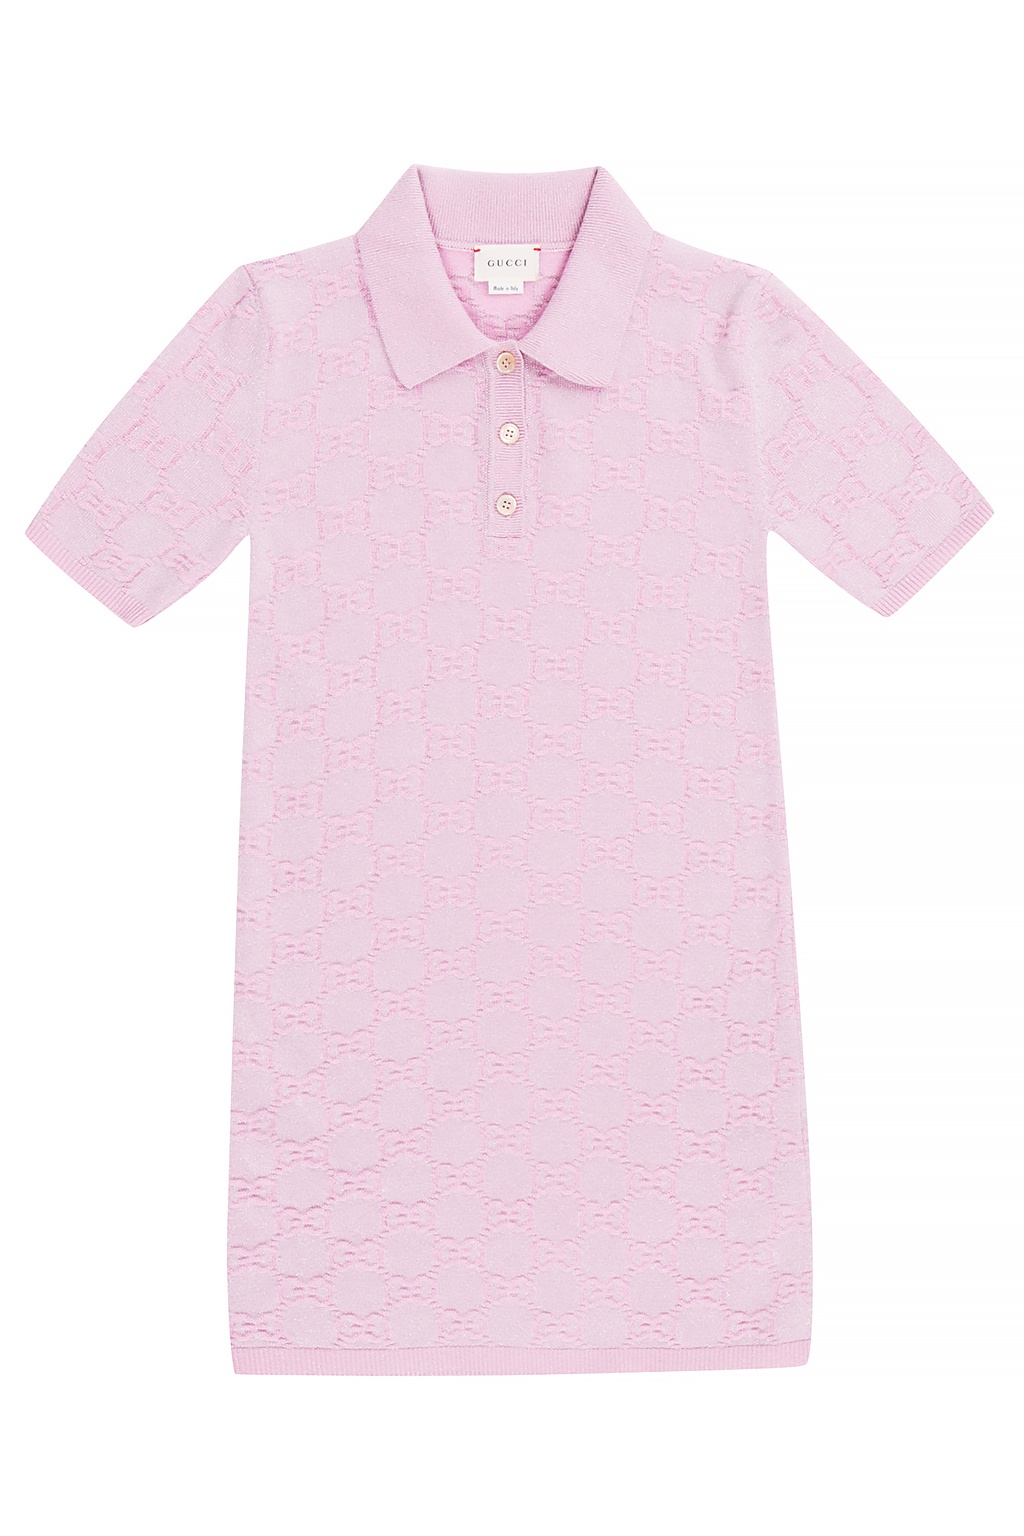 Pink Dress with logo Gucci - Vitkac Canada